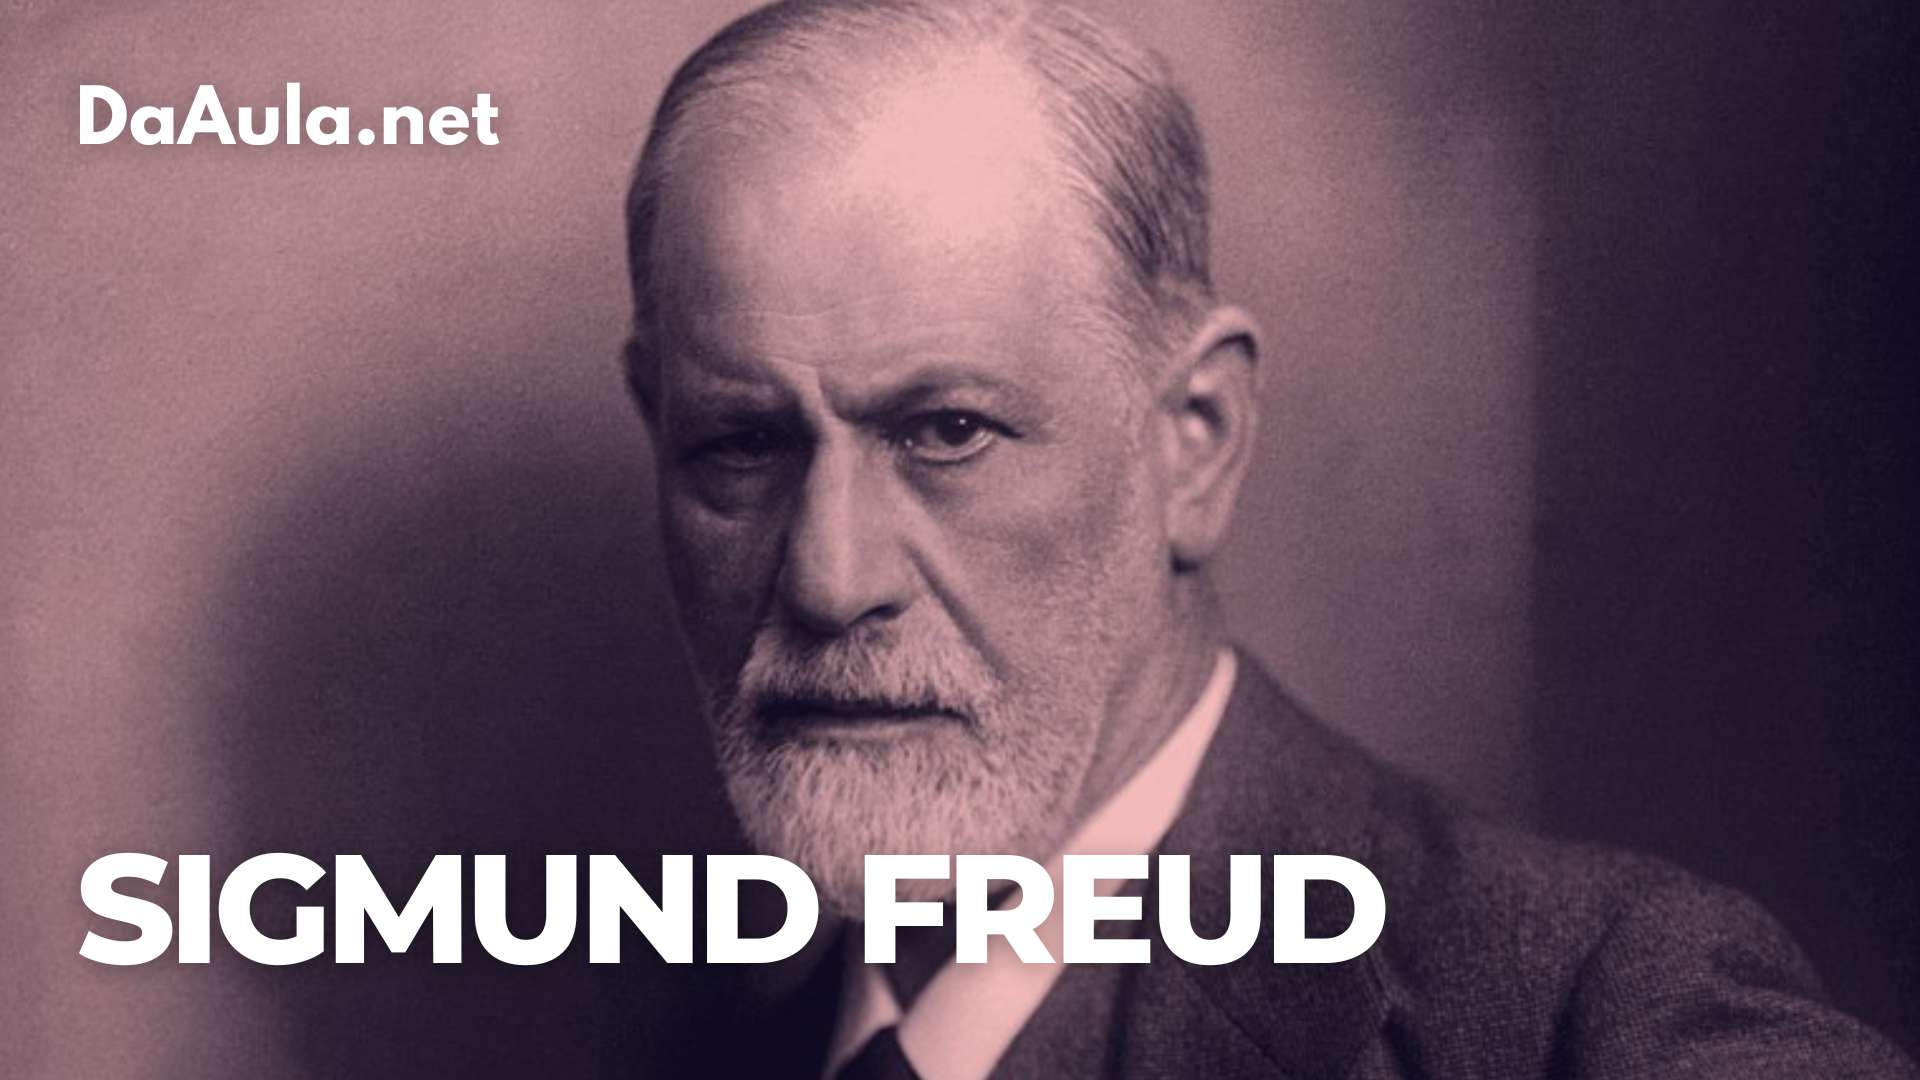 Quem foi Freud